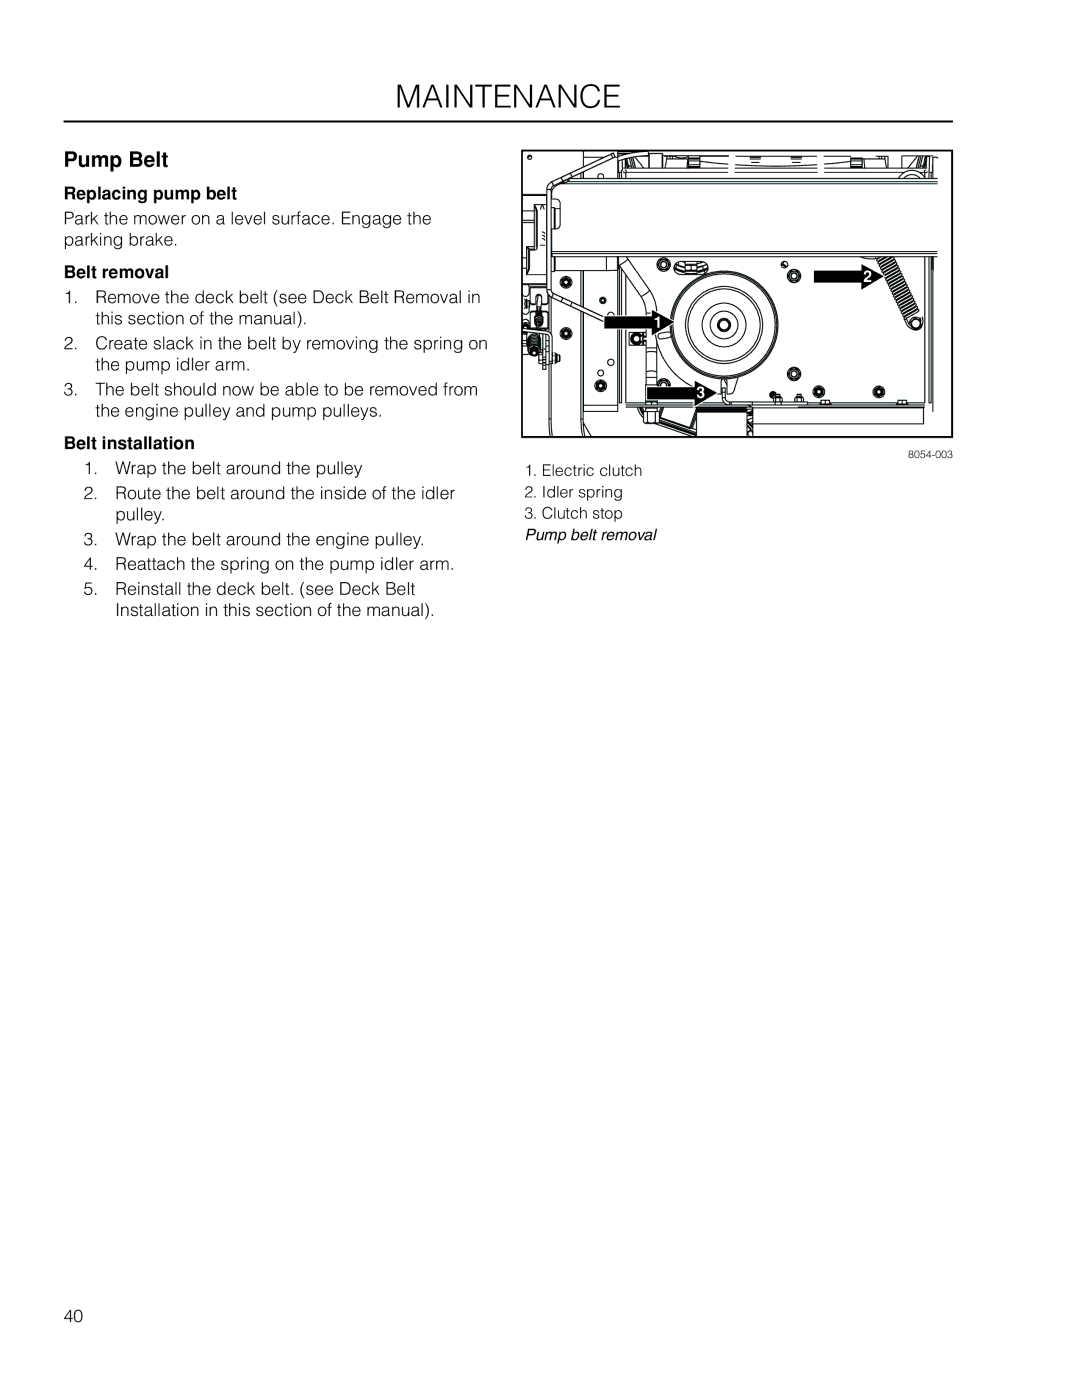 Husqvarna EZ4824 BF manual Pump Belt, Replacing pump belt, Belt removal, Belt installation 